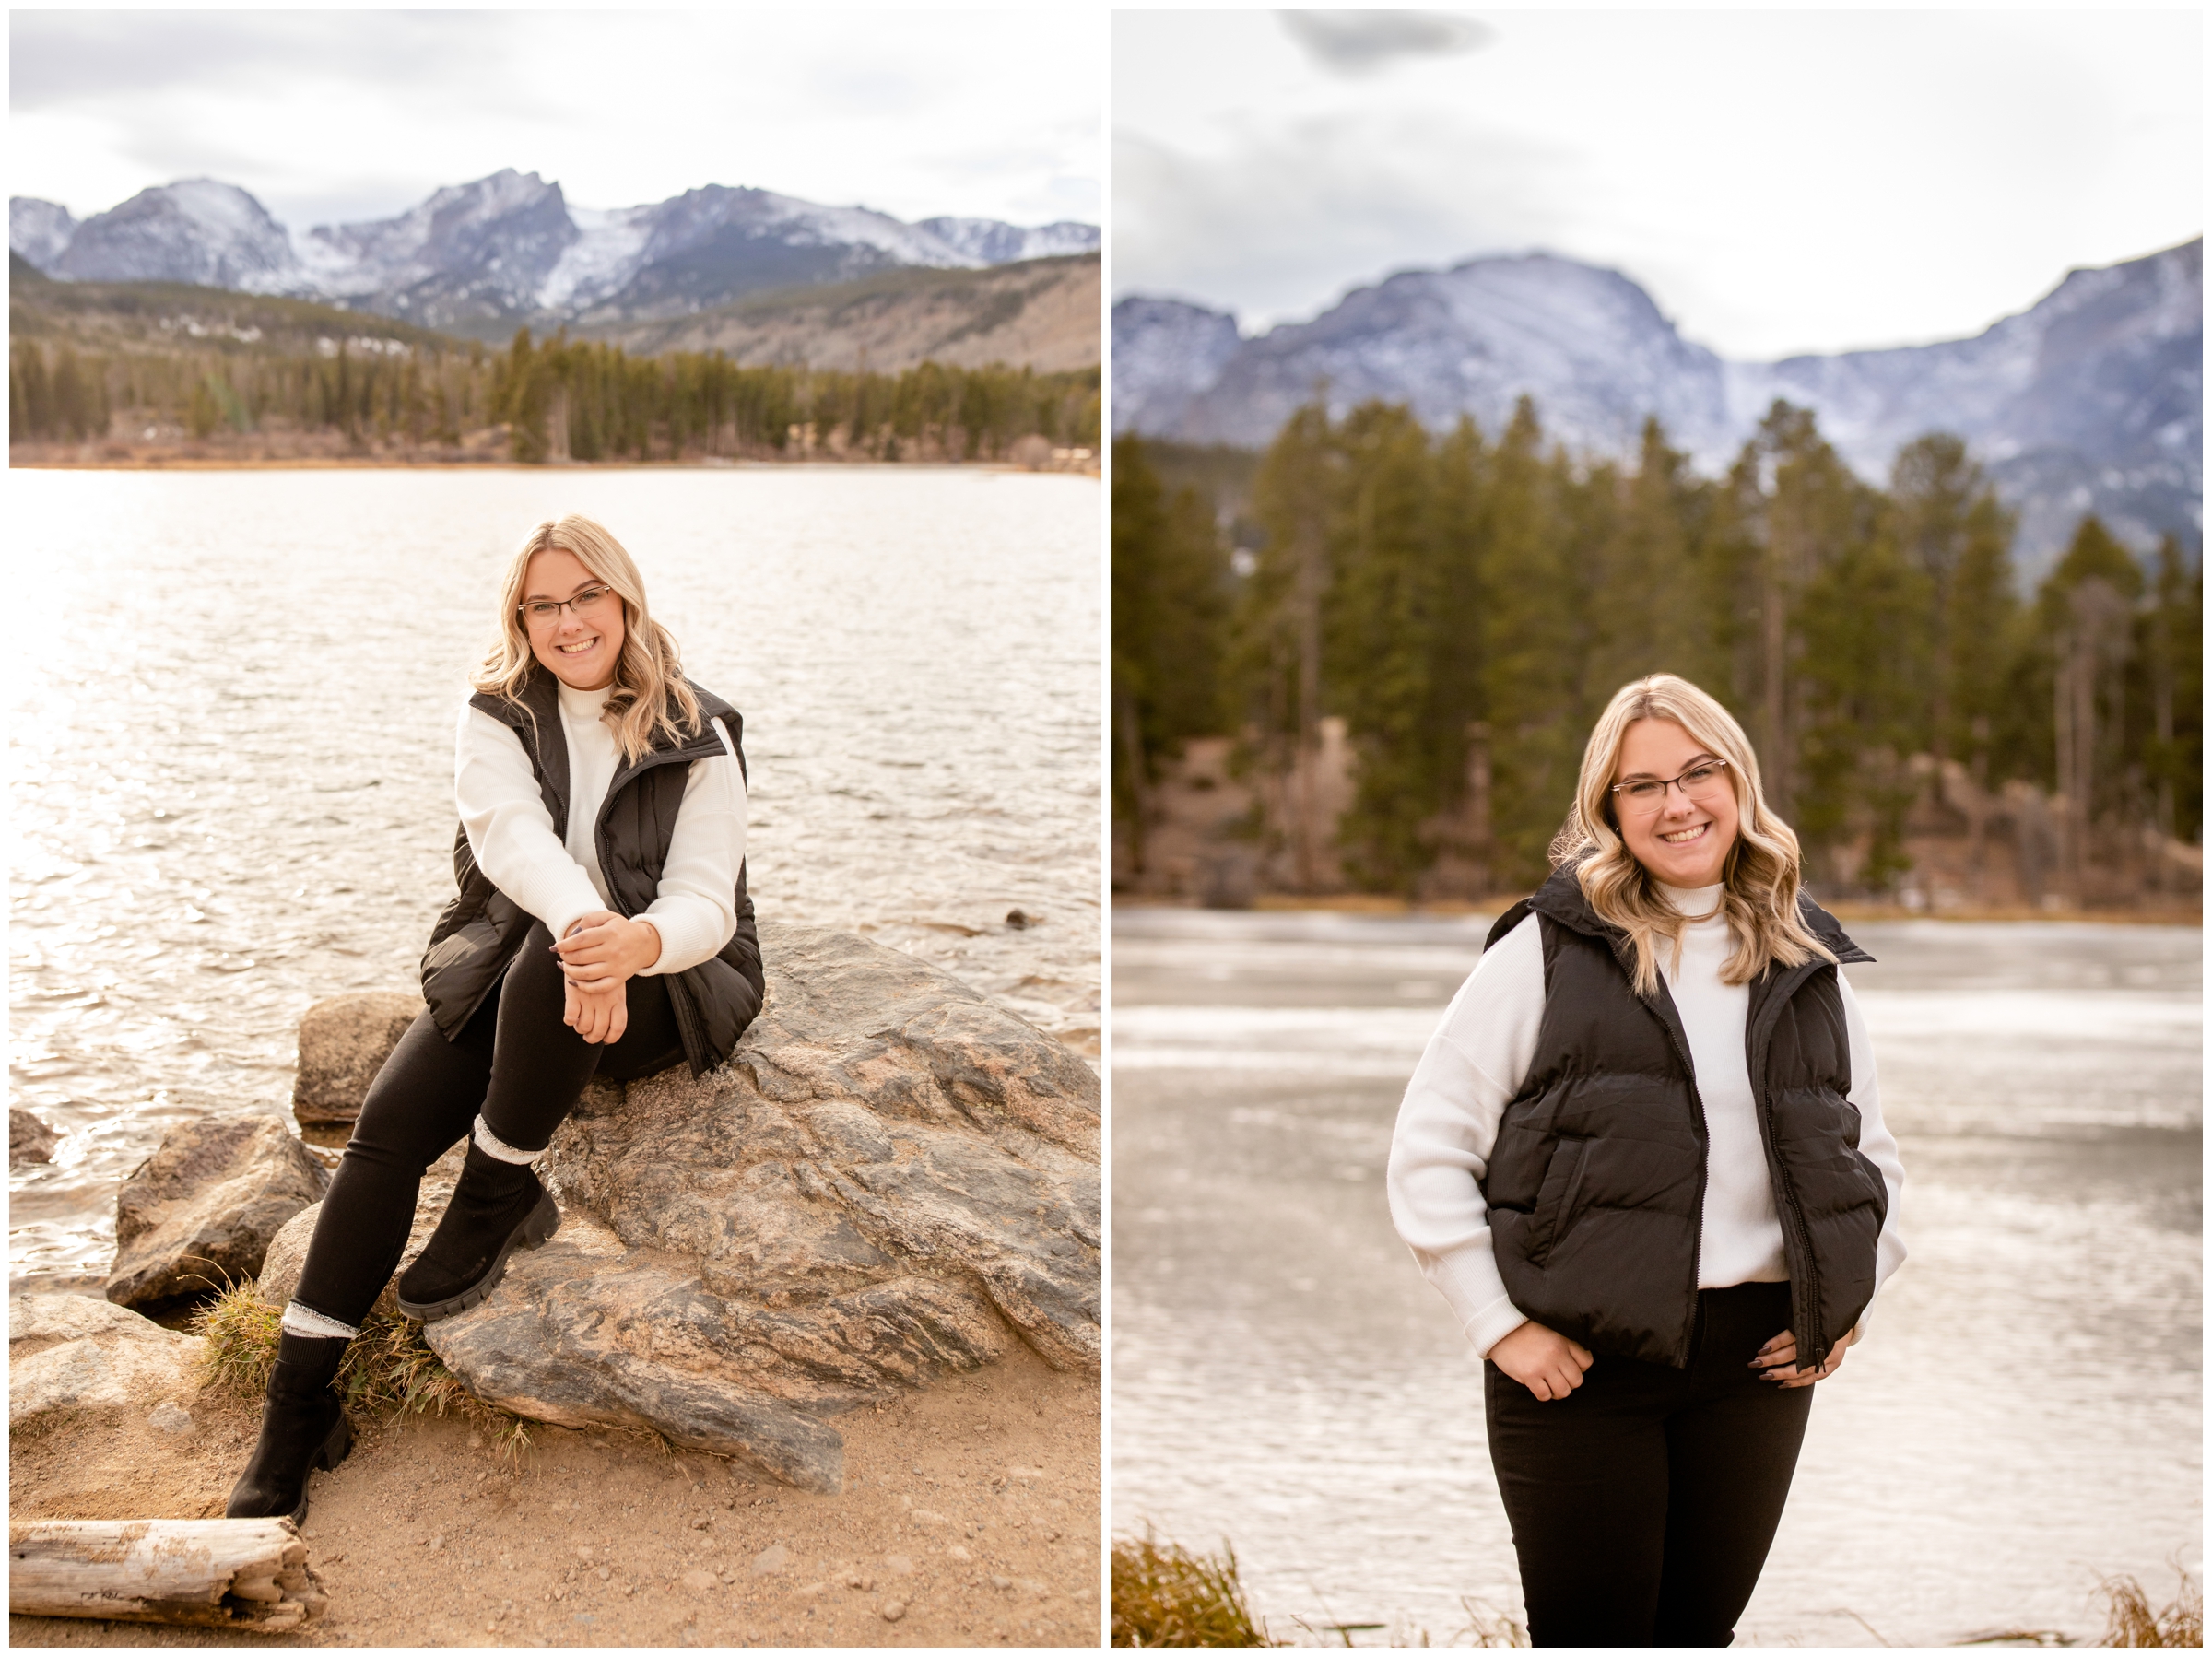 Senior photos in Colorado mountains at RMNP by Estes Park portrait photographer Plum Pretty Photography